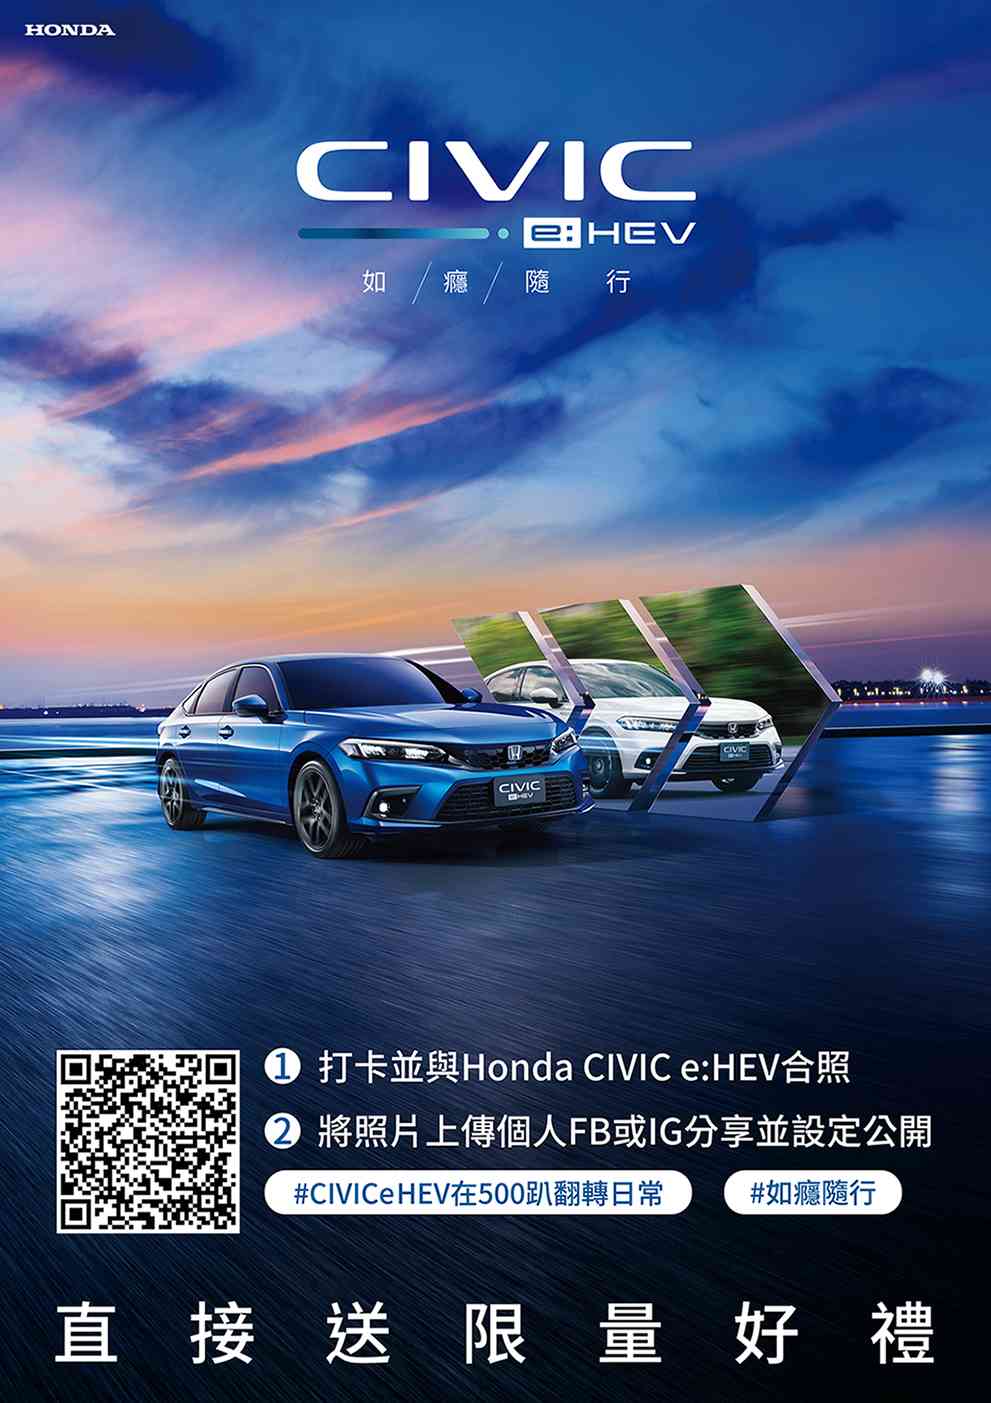 All-New CIVIC e:HEV將在12/1~12/3現身500趴活動歡迎到場拍照打卡領取Honda限量好禮